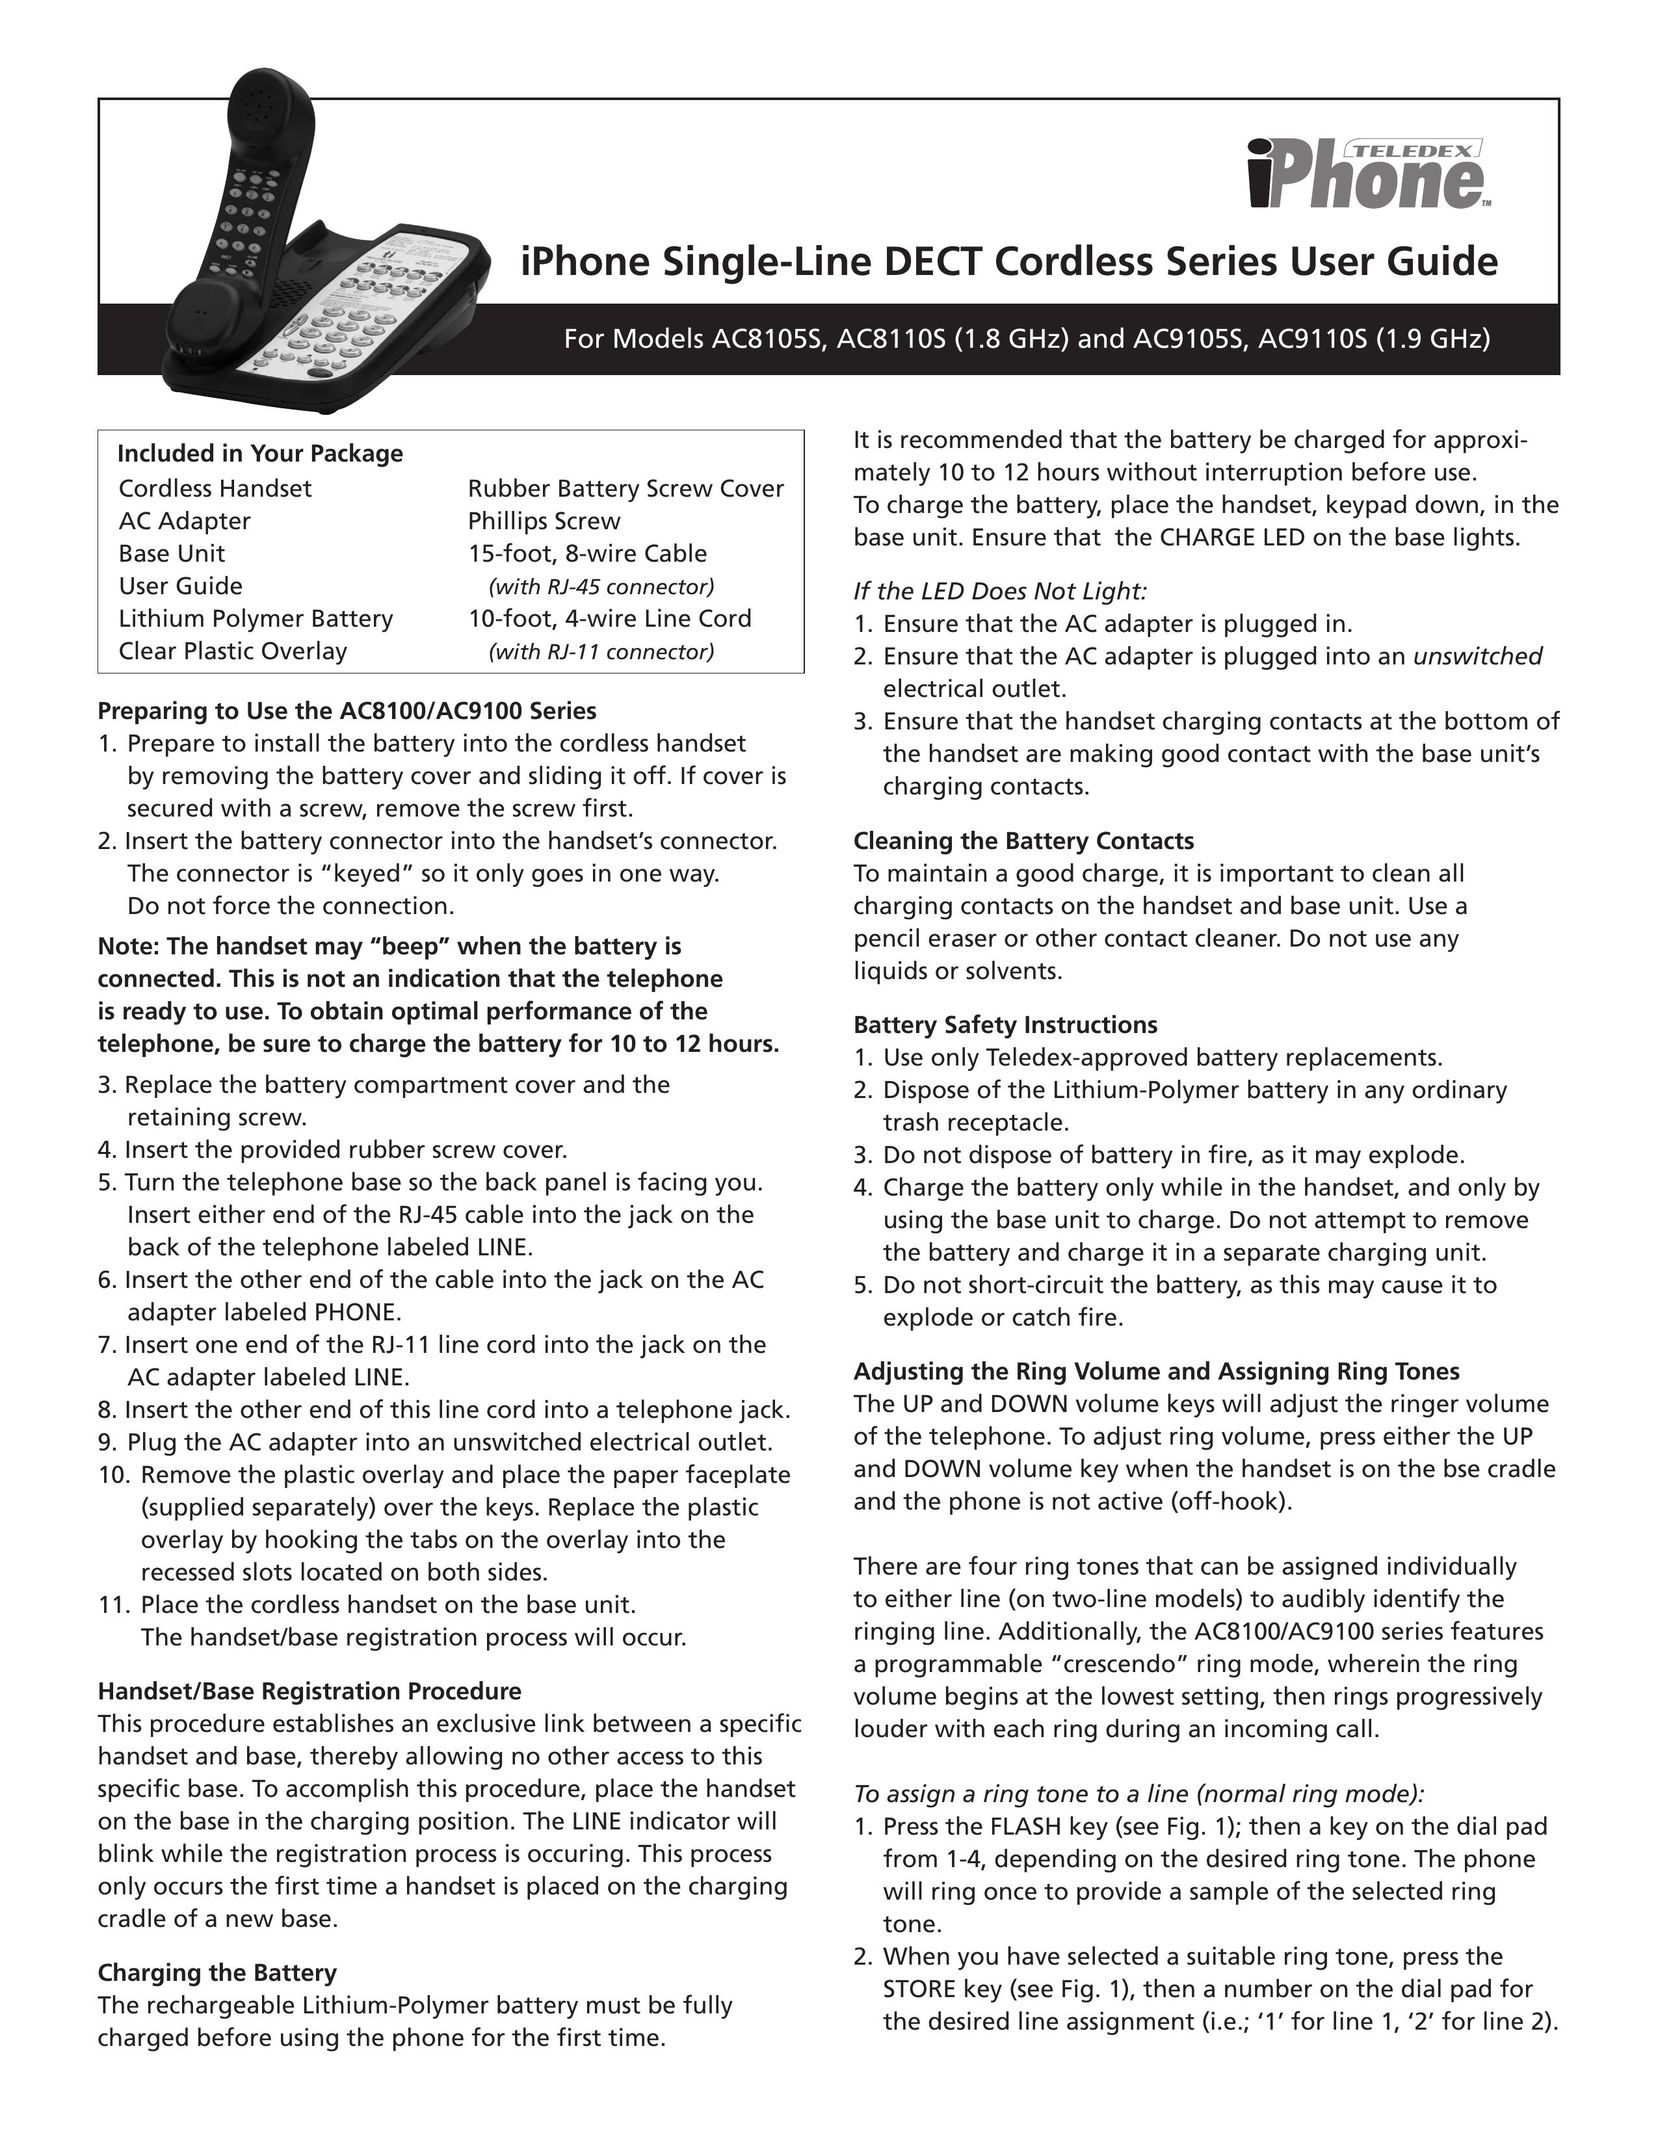 Teledex AC8105S Cordless Telephone User Manual